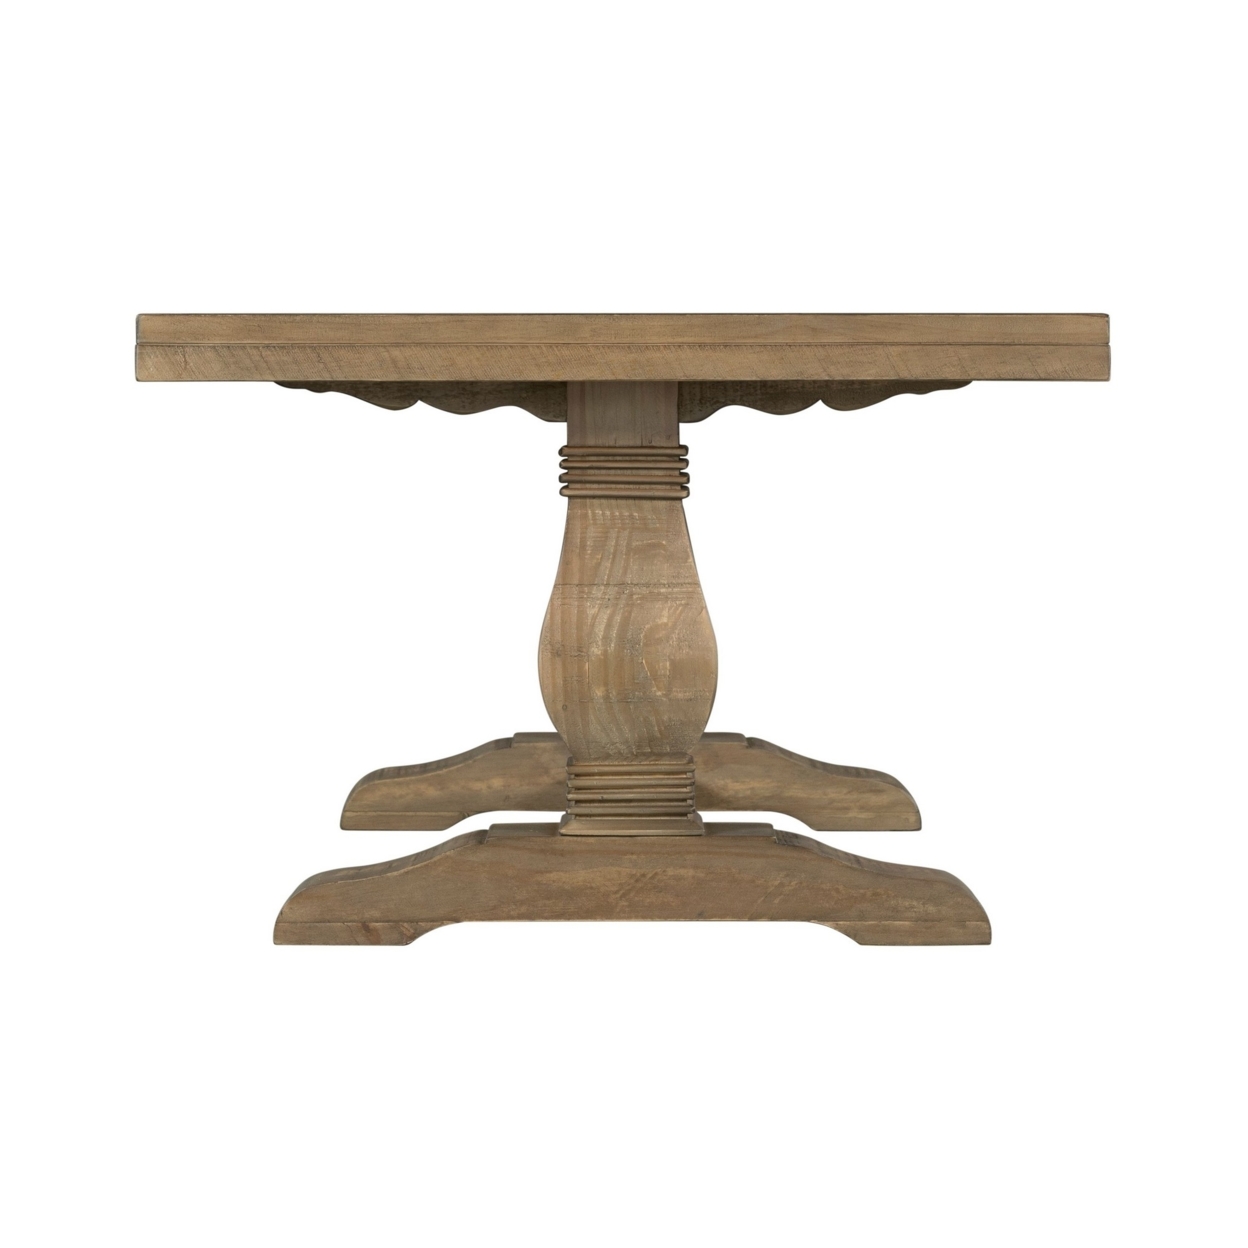 19 Inch Rectangular Coffee Table With Pedestal Base, Brown- Saltoro Sherpi